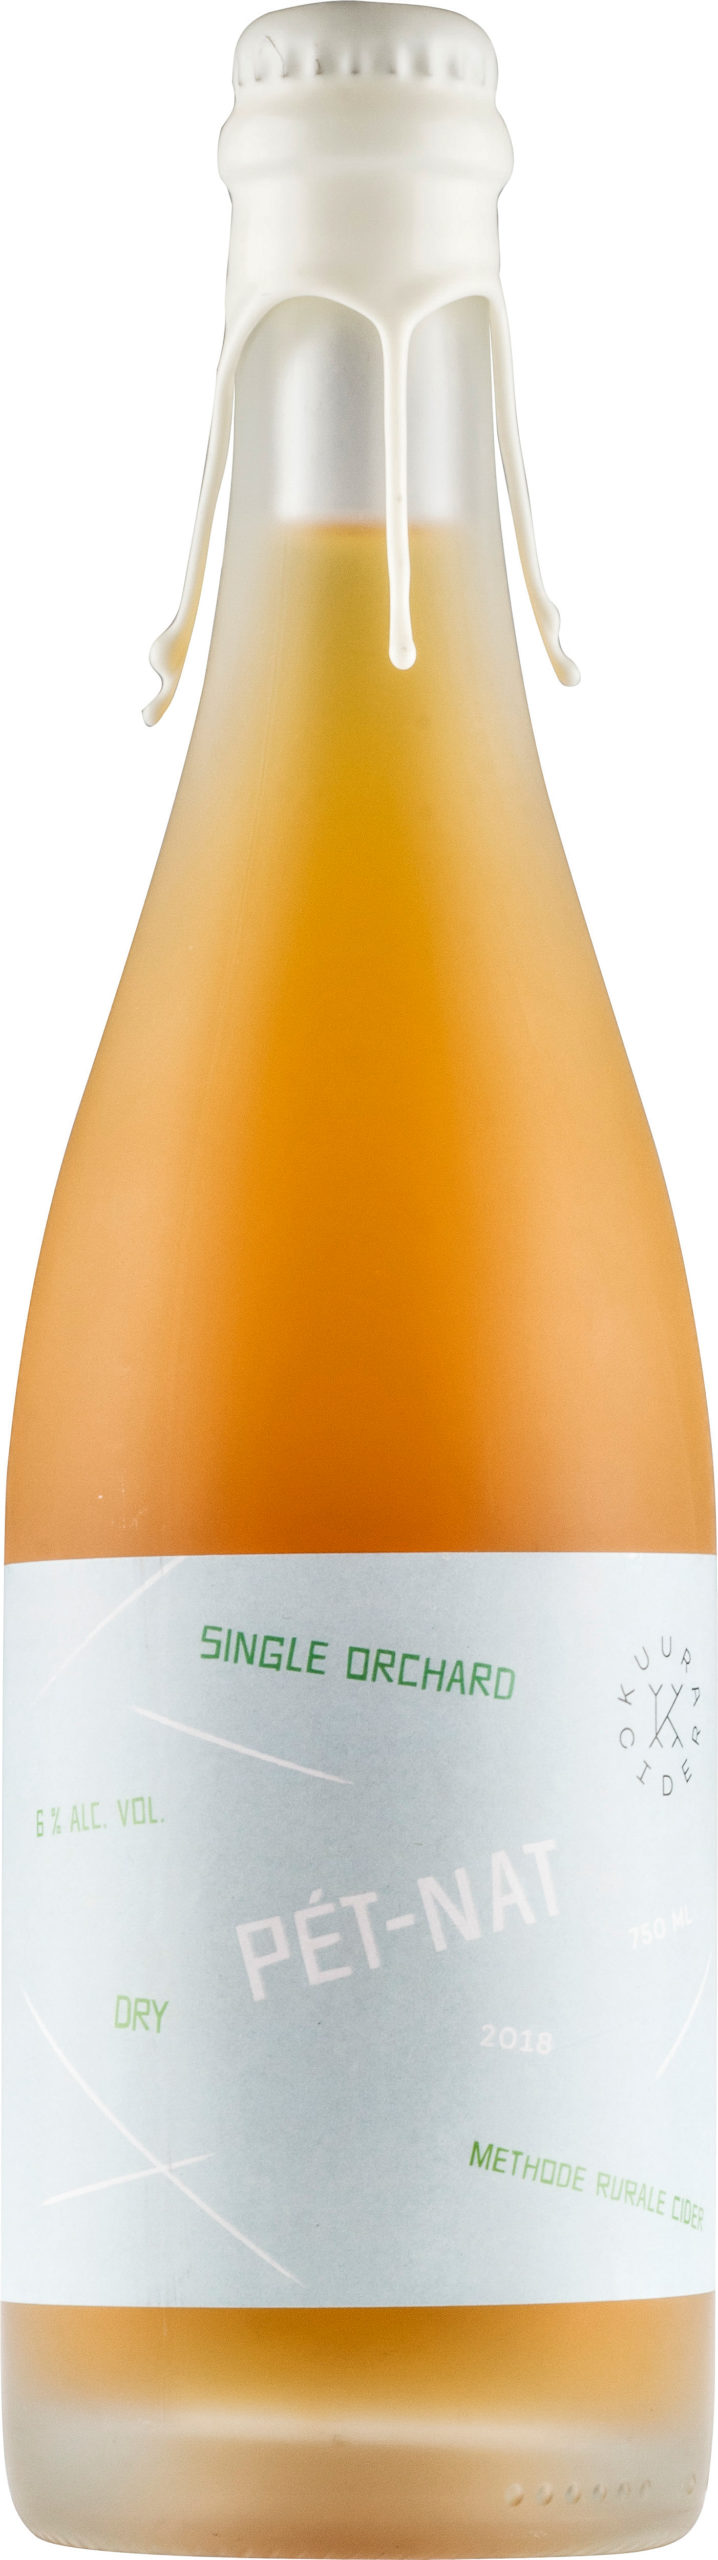 Kuura Single Orchard Pét-Nat Dry Cider 2018